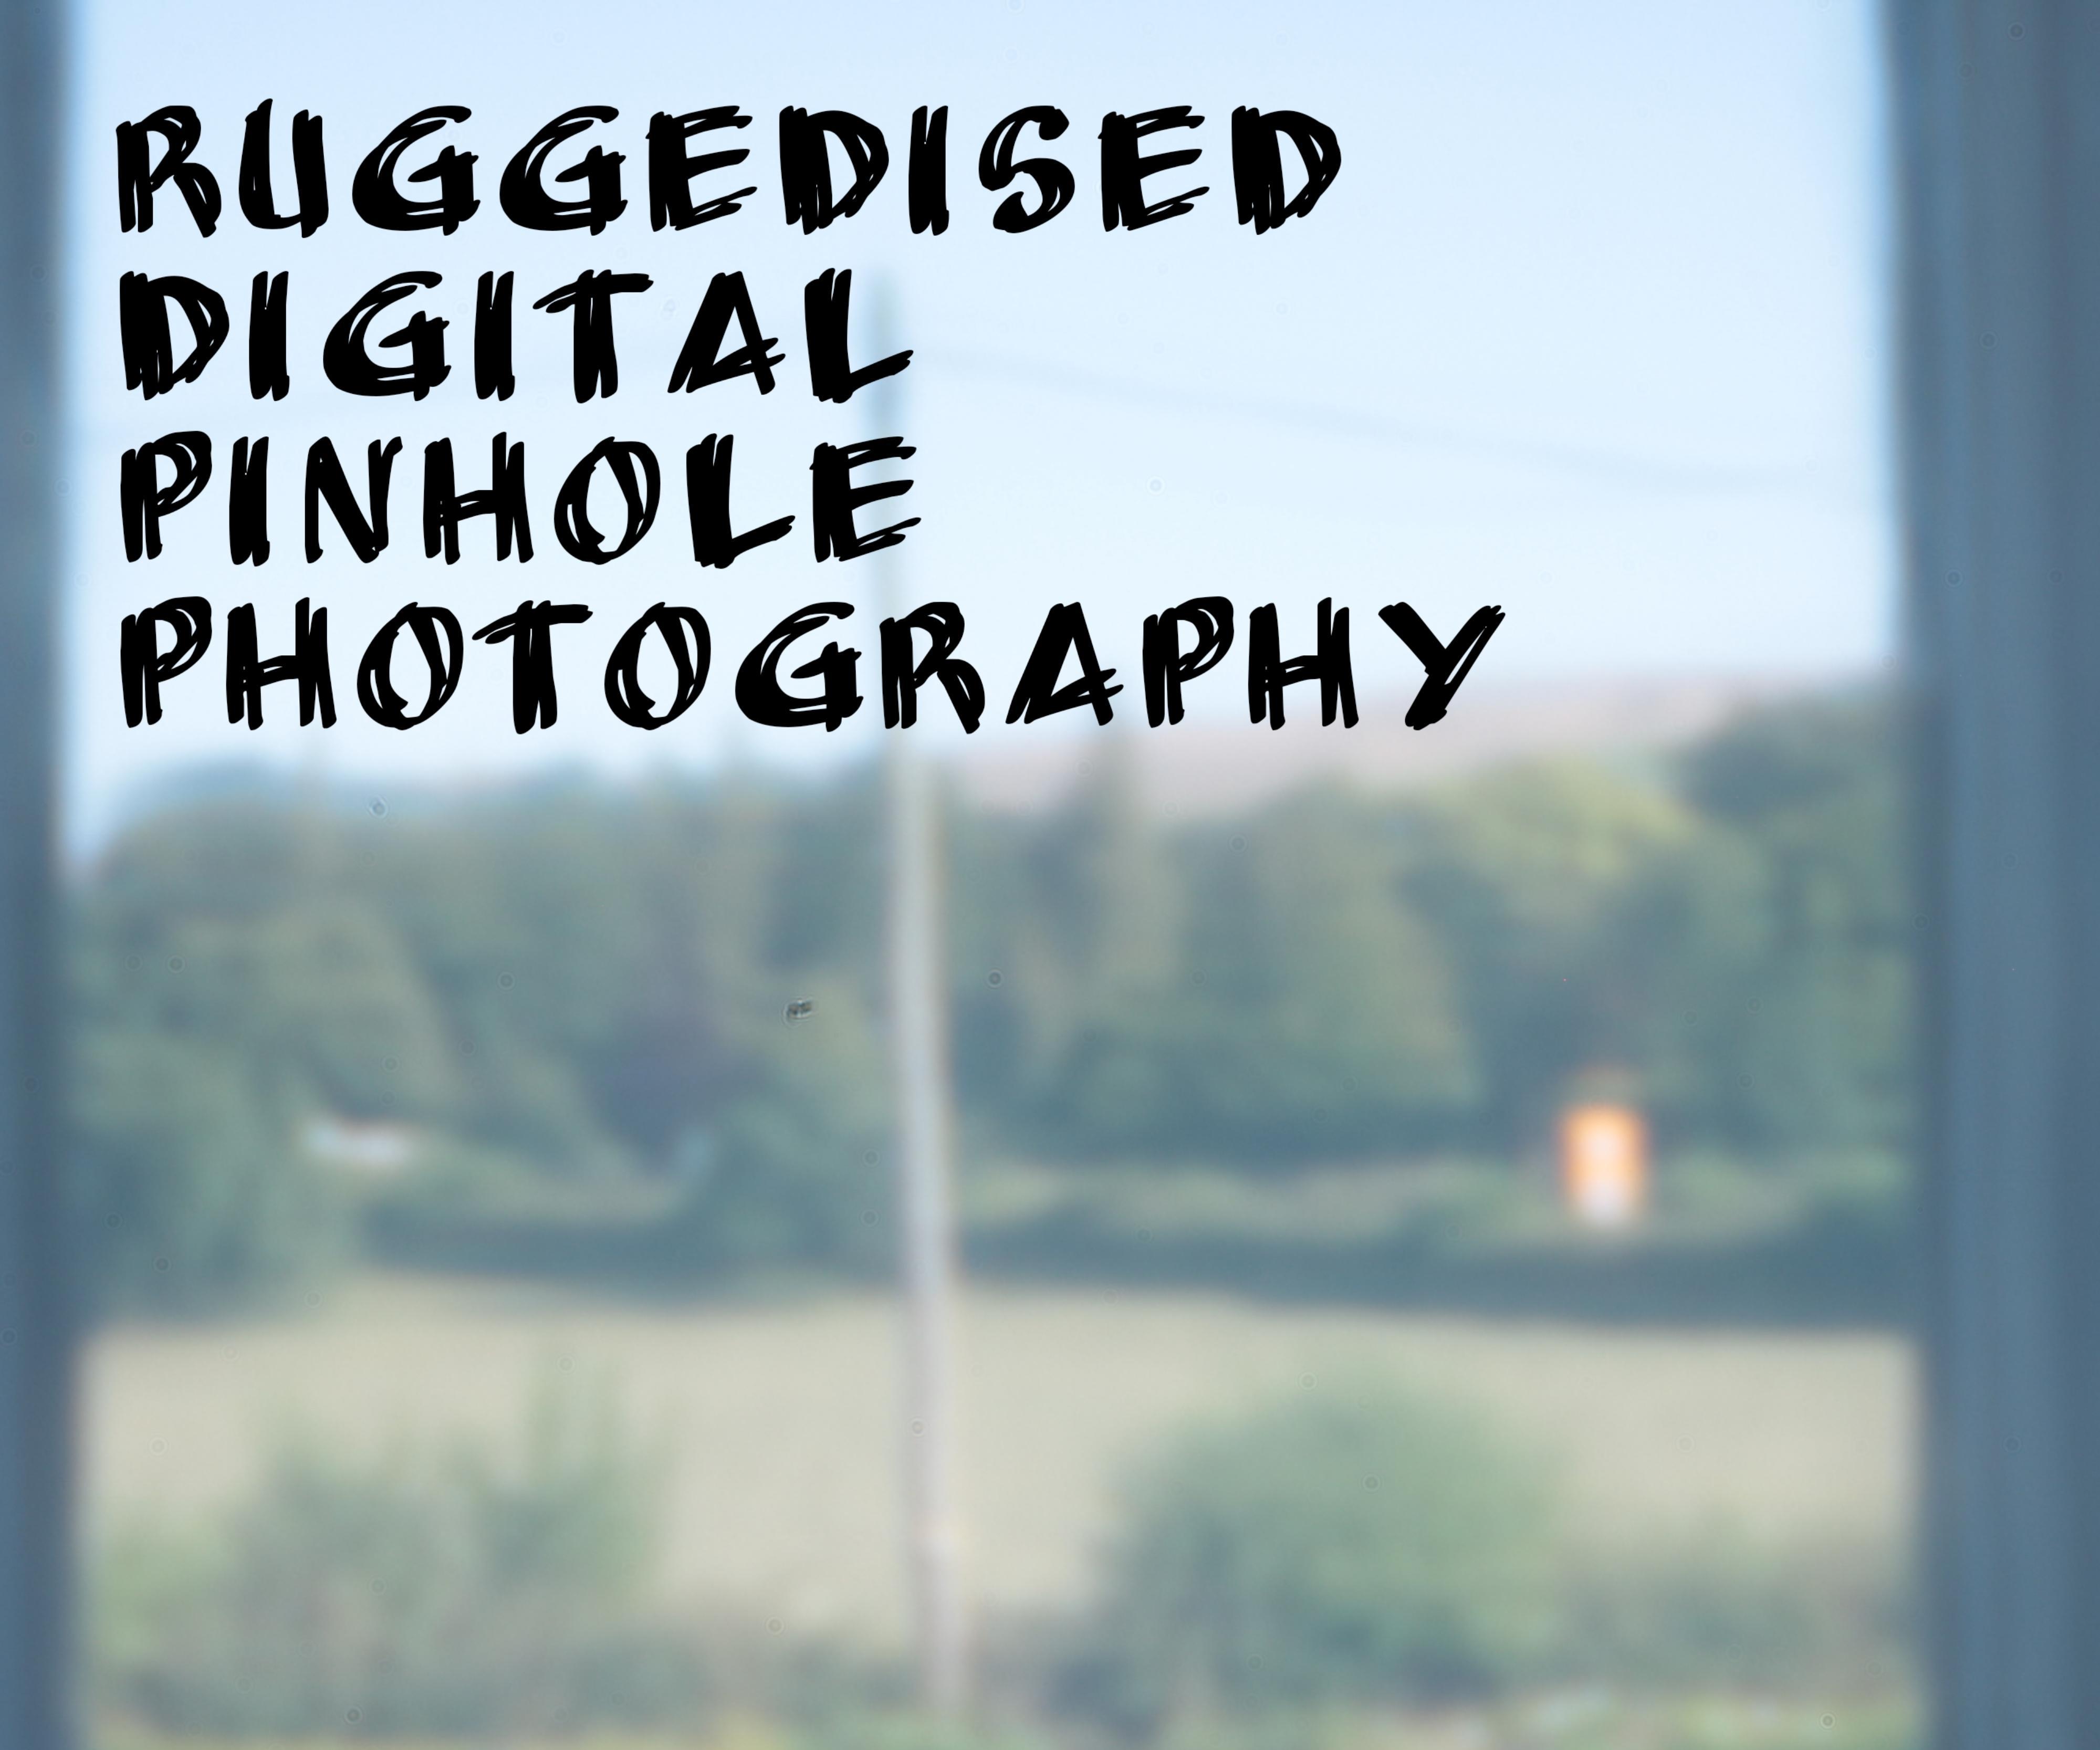 Ruggedised Digital Pinhole Photography